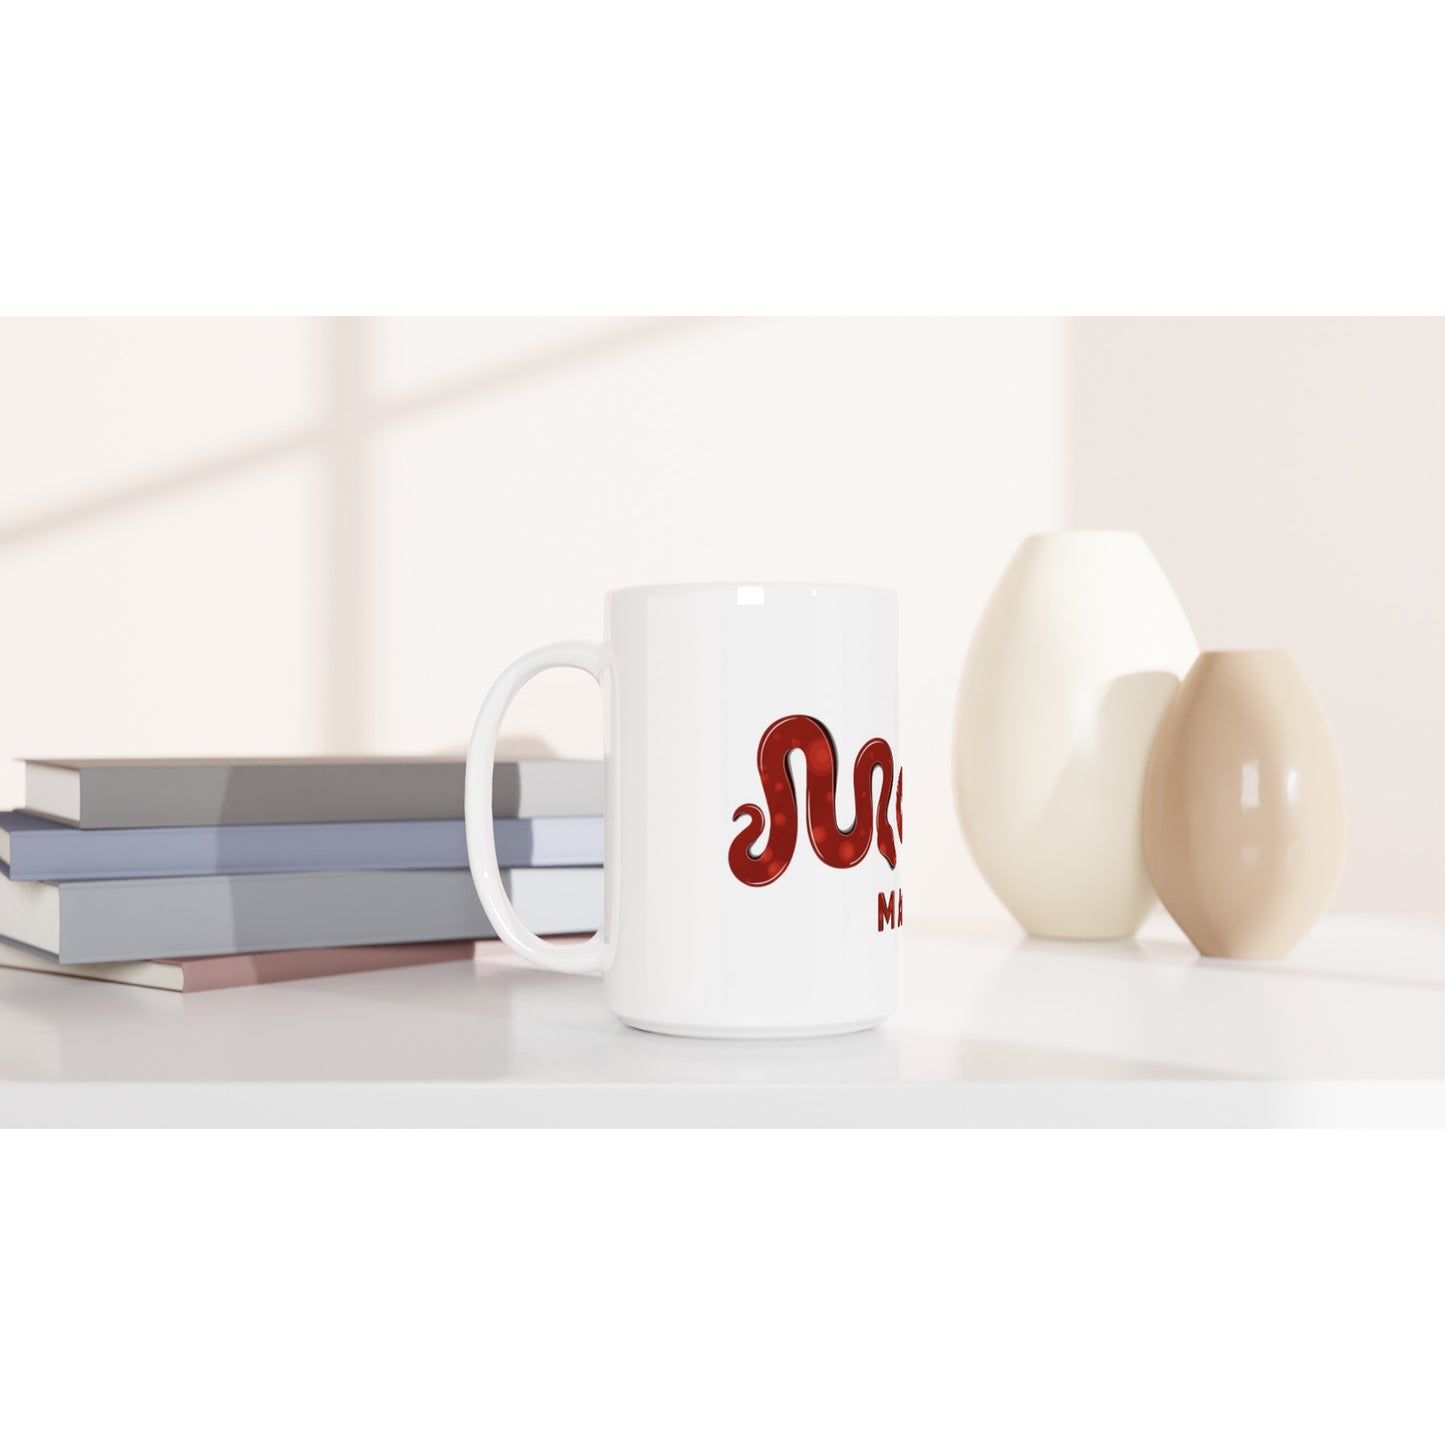 Morph Market (Red Circles) - White 15oz Ceramic Mug